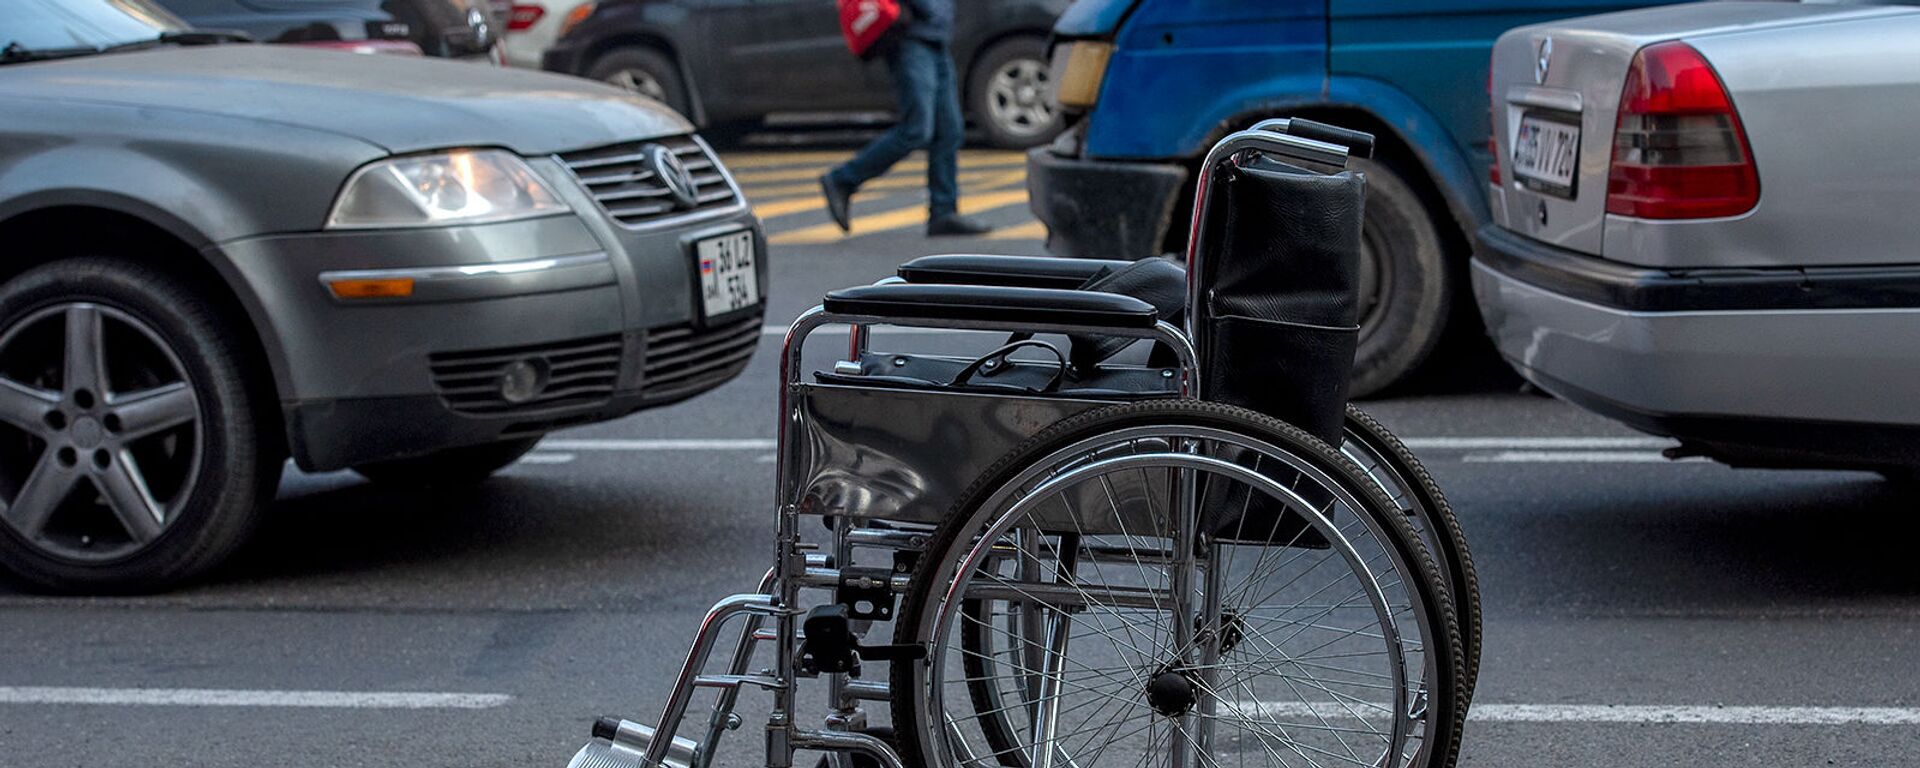 Инвалидная коляска на улице Вардананц - Sputnik Արմենիա, 1920, 03.02.2021